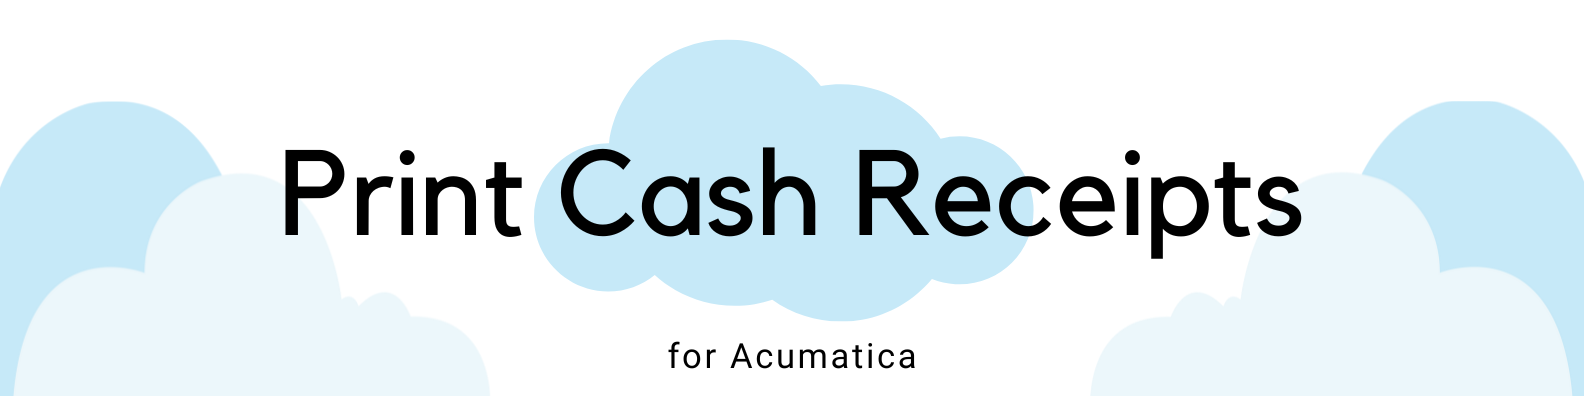 Print Cash Receipts for Acumatica